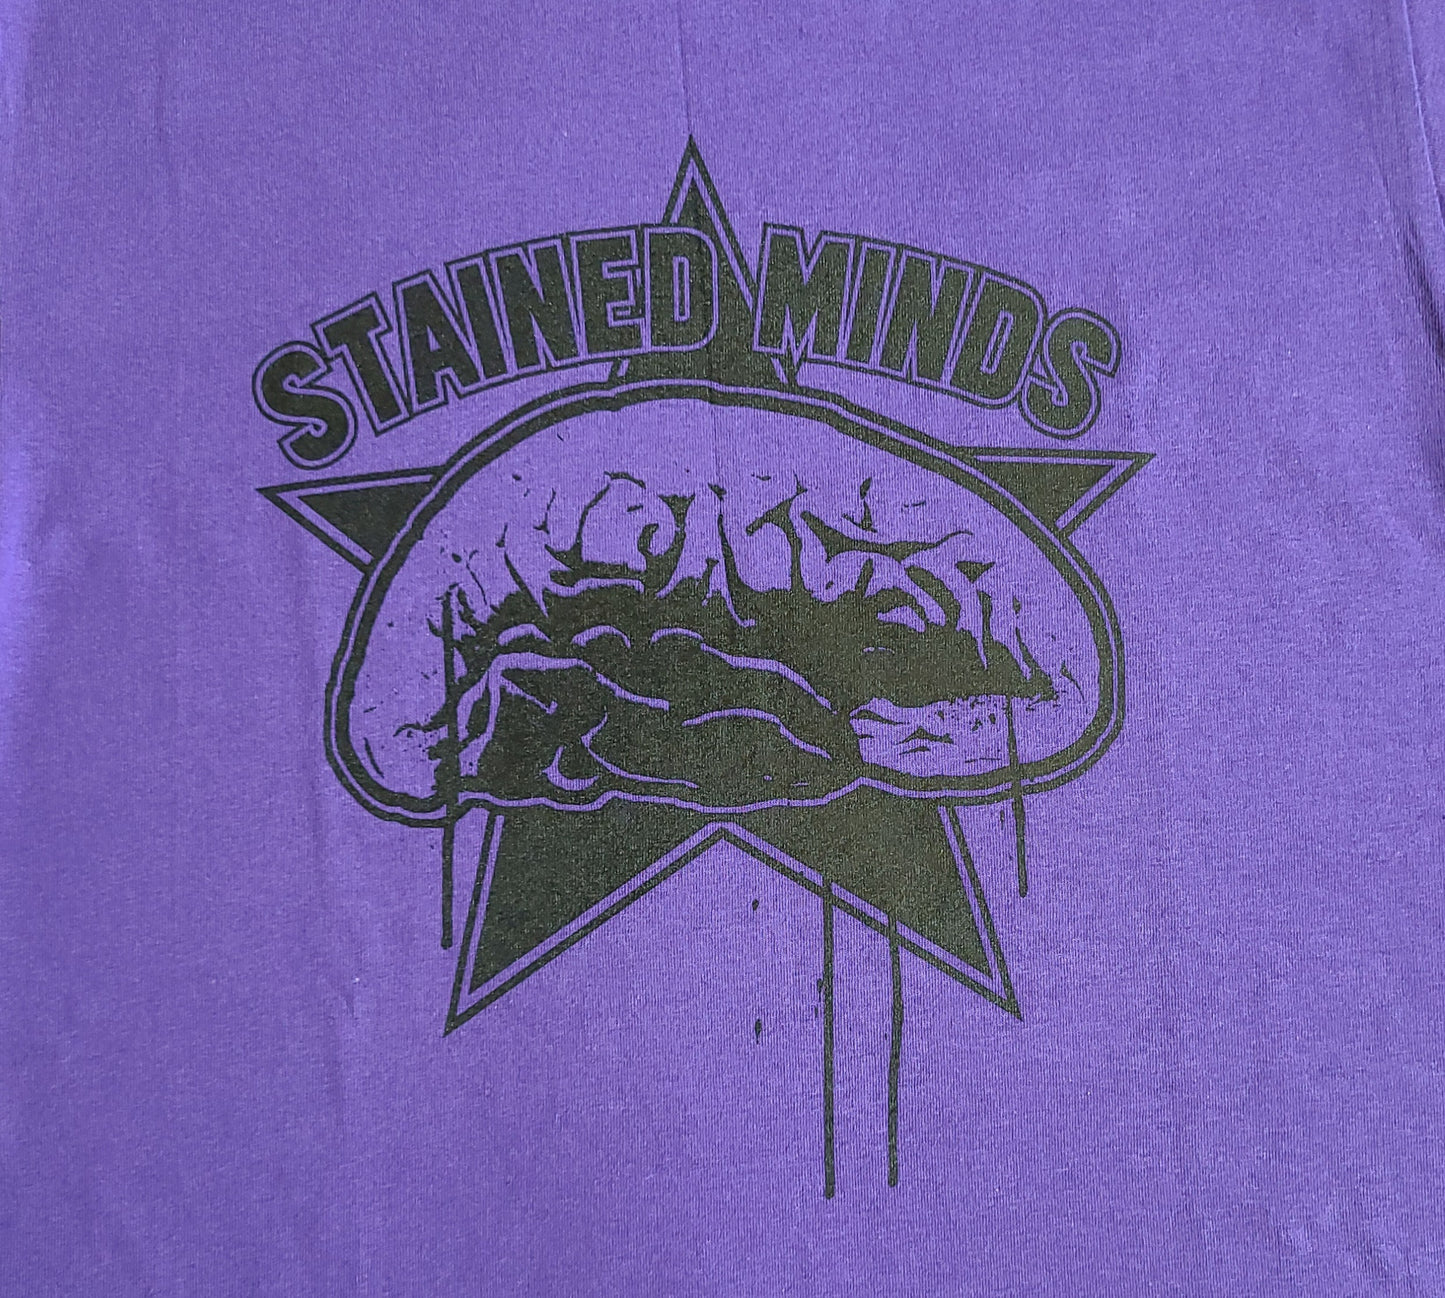 The Stained Brain - Purple Haze Unisex T-Shirt